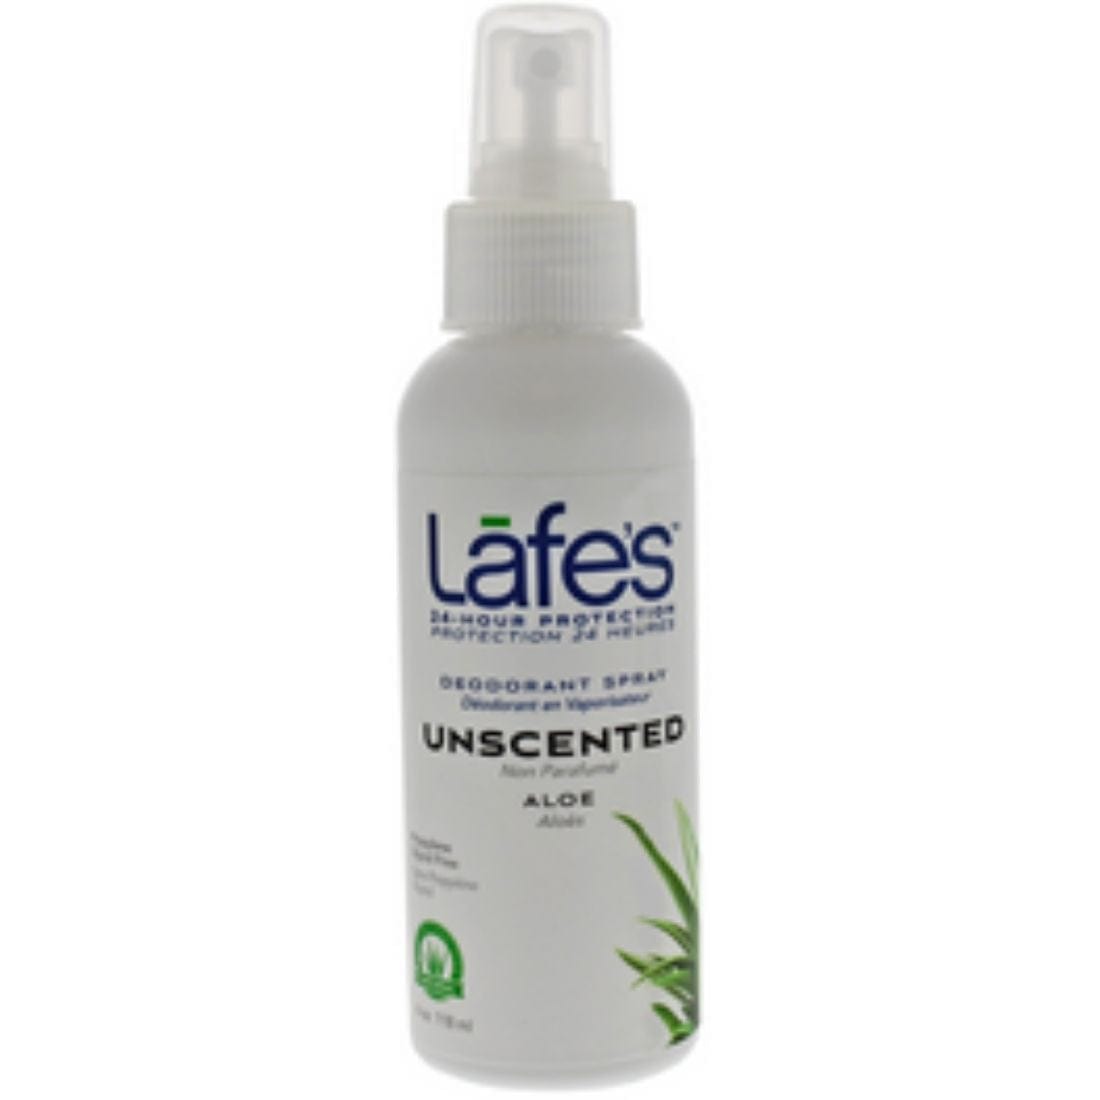 Lafe's Body Care Natural Crystal Deodorant Spray